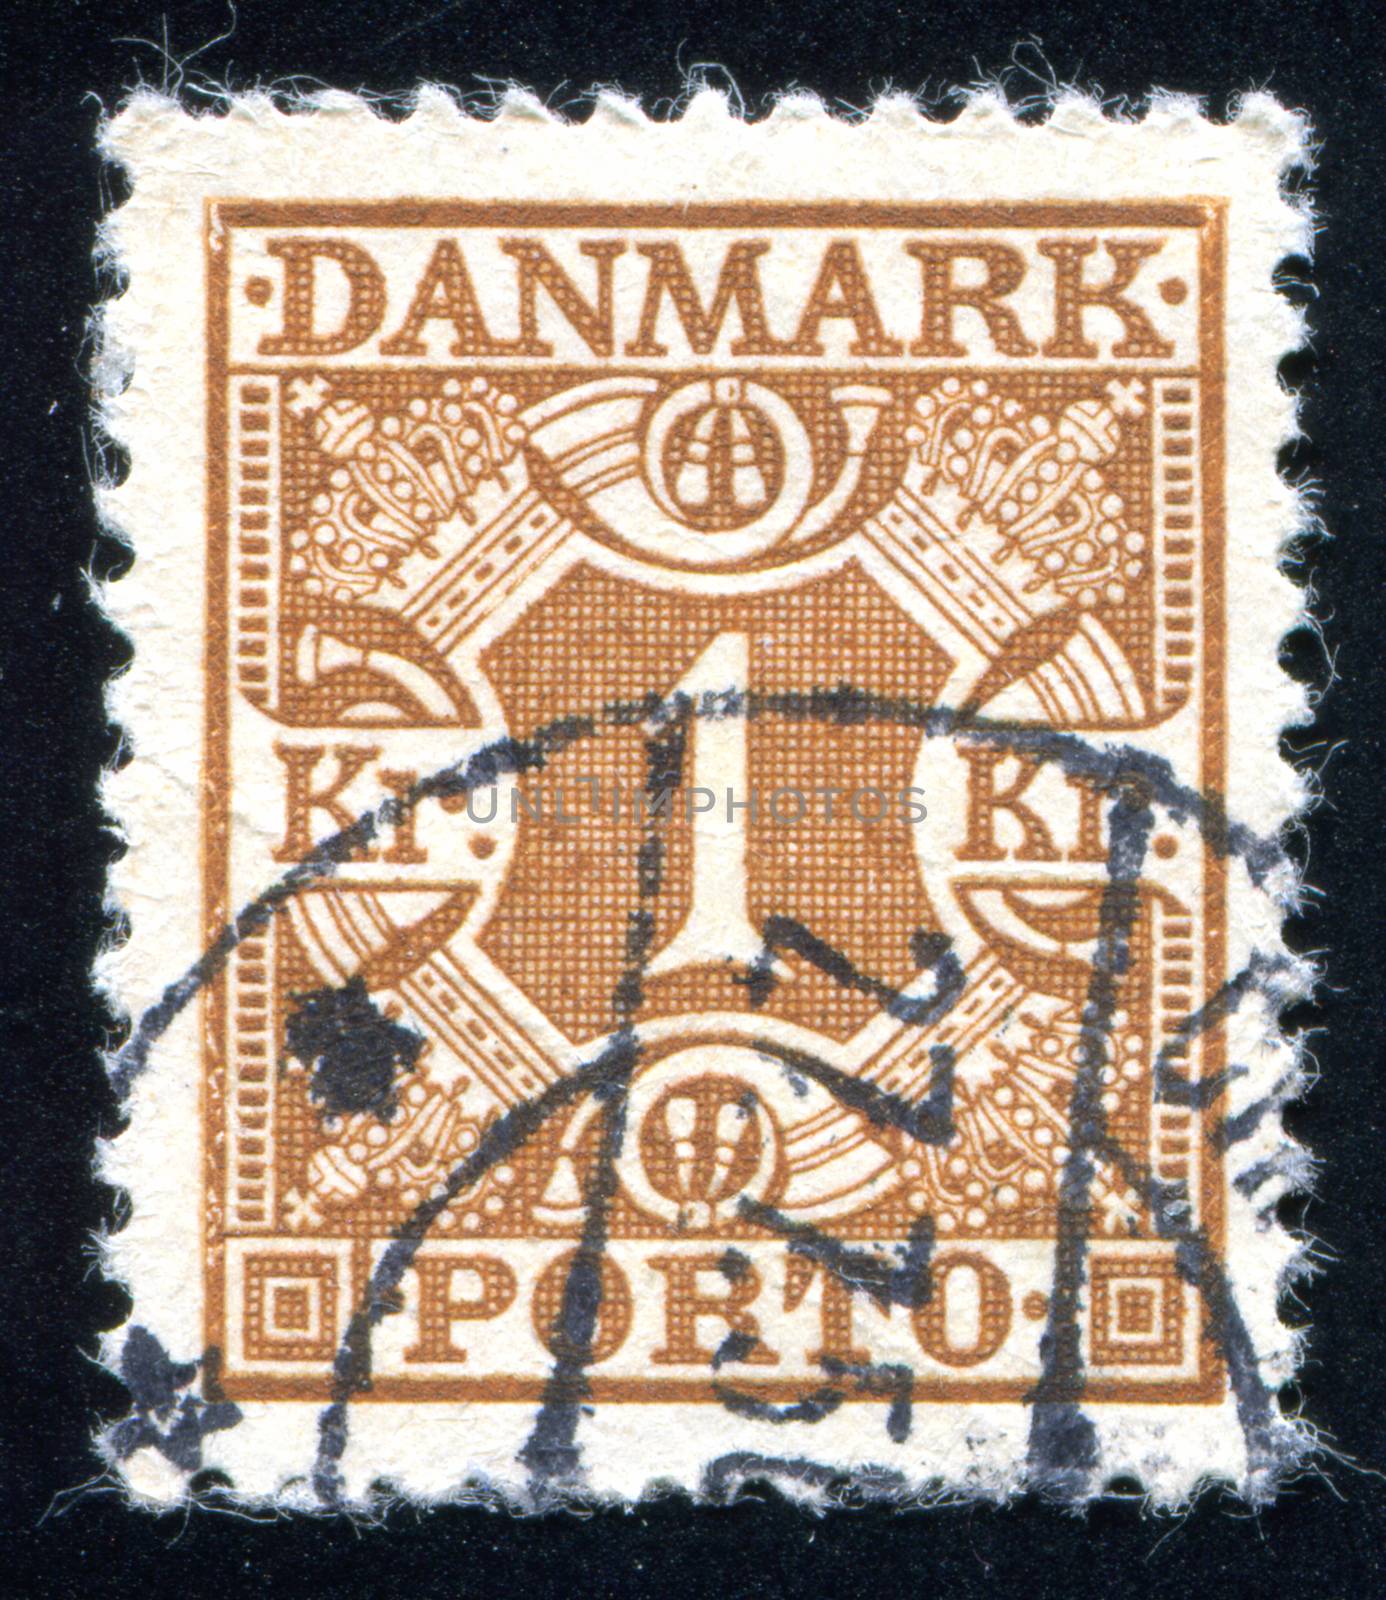 DENMARK - CIRCA 1921: stamp printed by Denmark, shows Royal Emblems, circa 1921